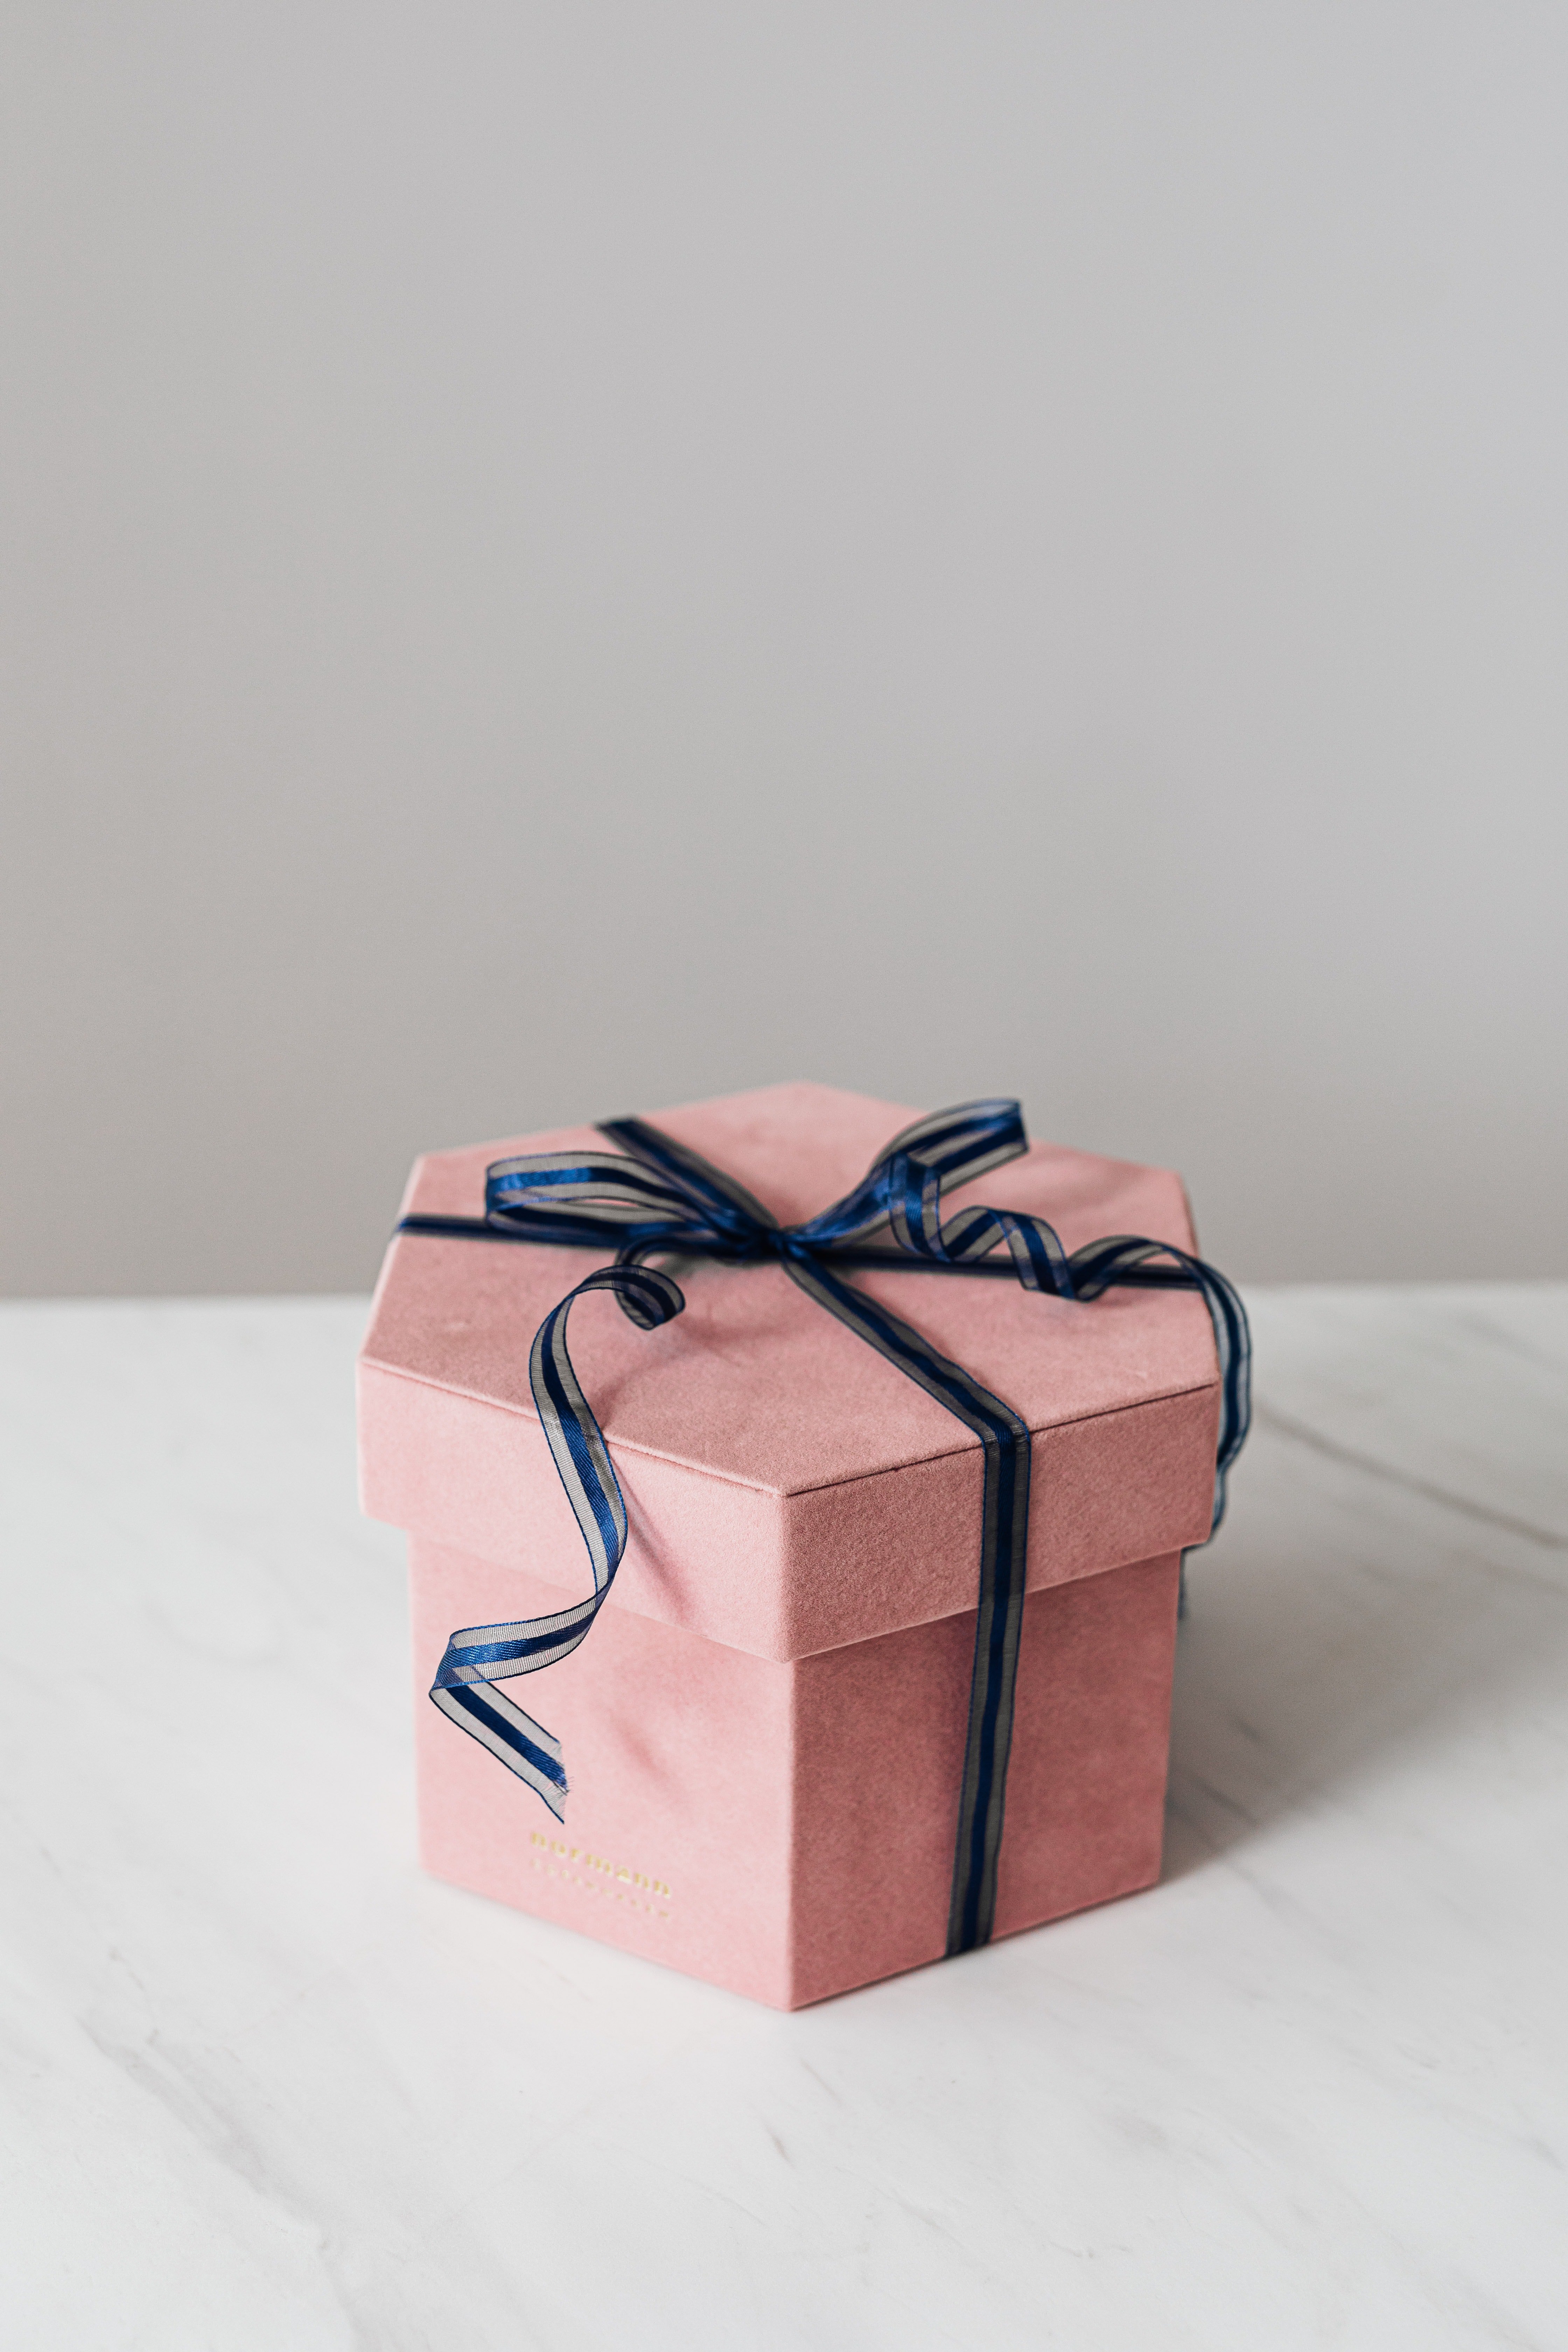 Pequeña caja de regalo. | Foto: Pexels